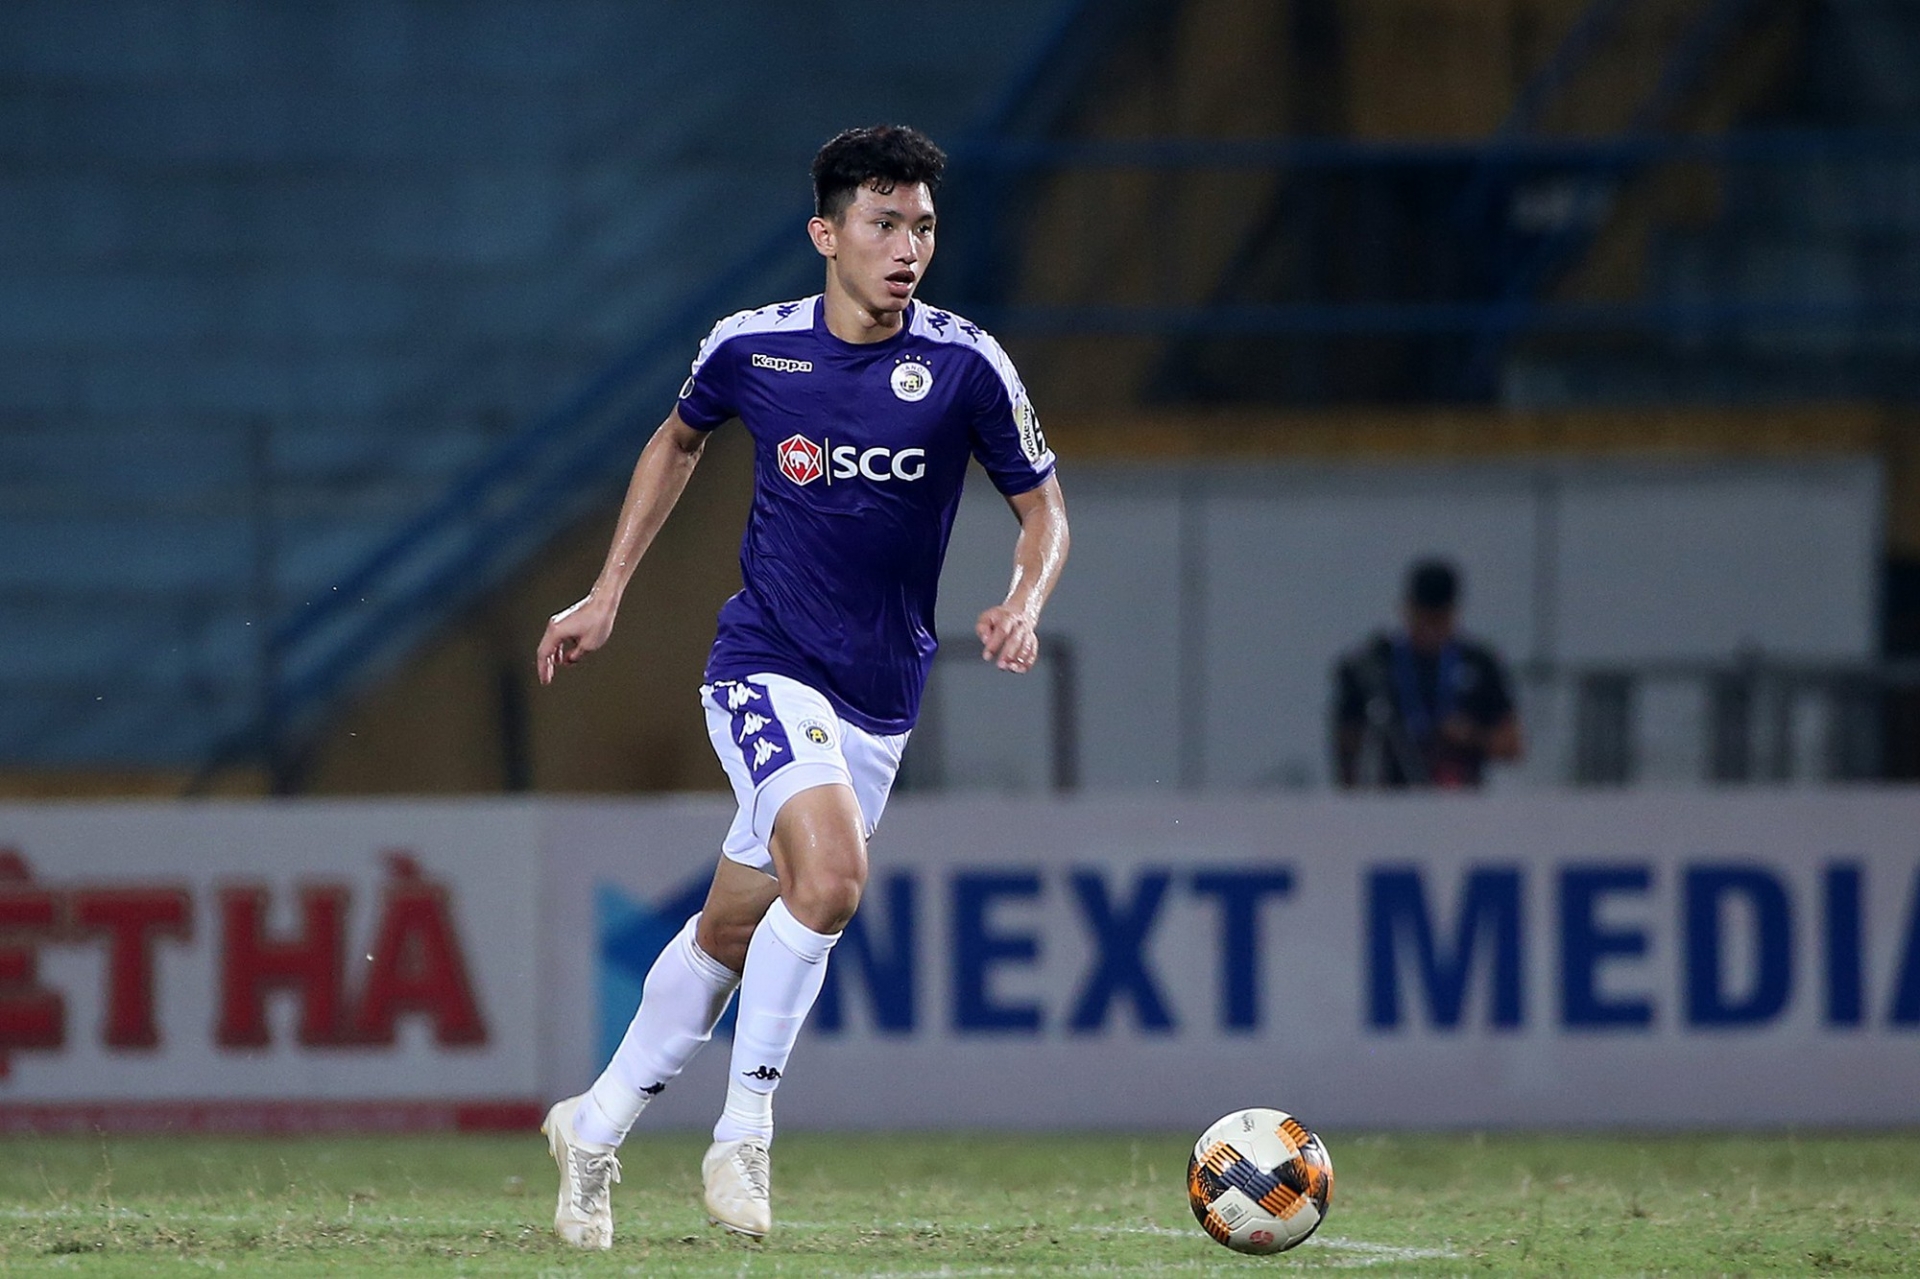 Van Hau's ability to play in V.League is still open